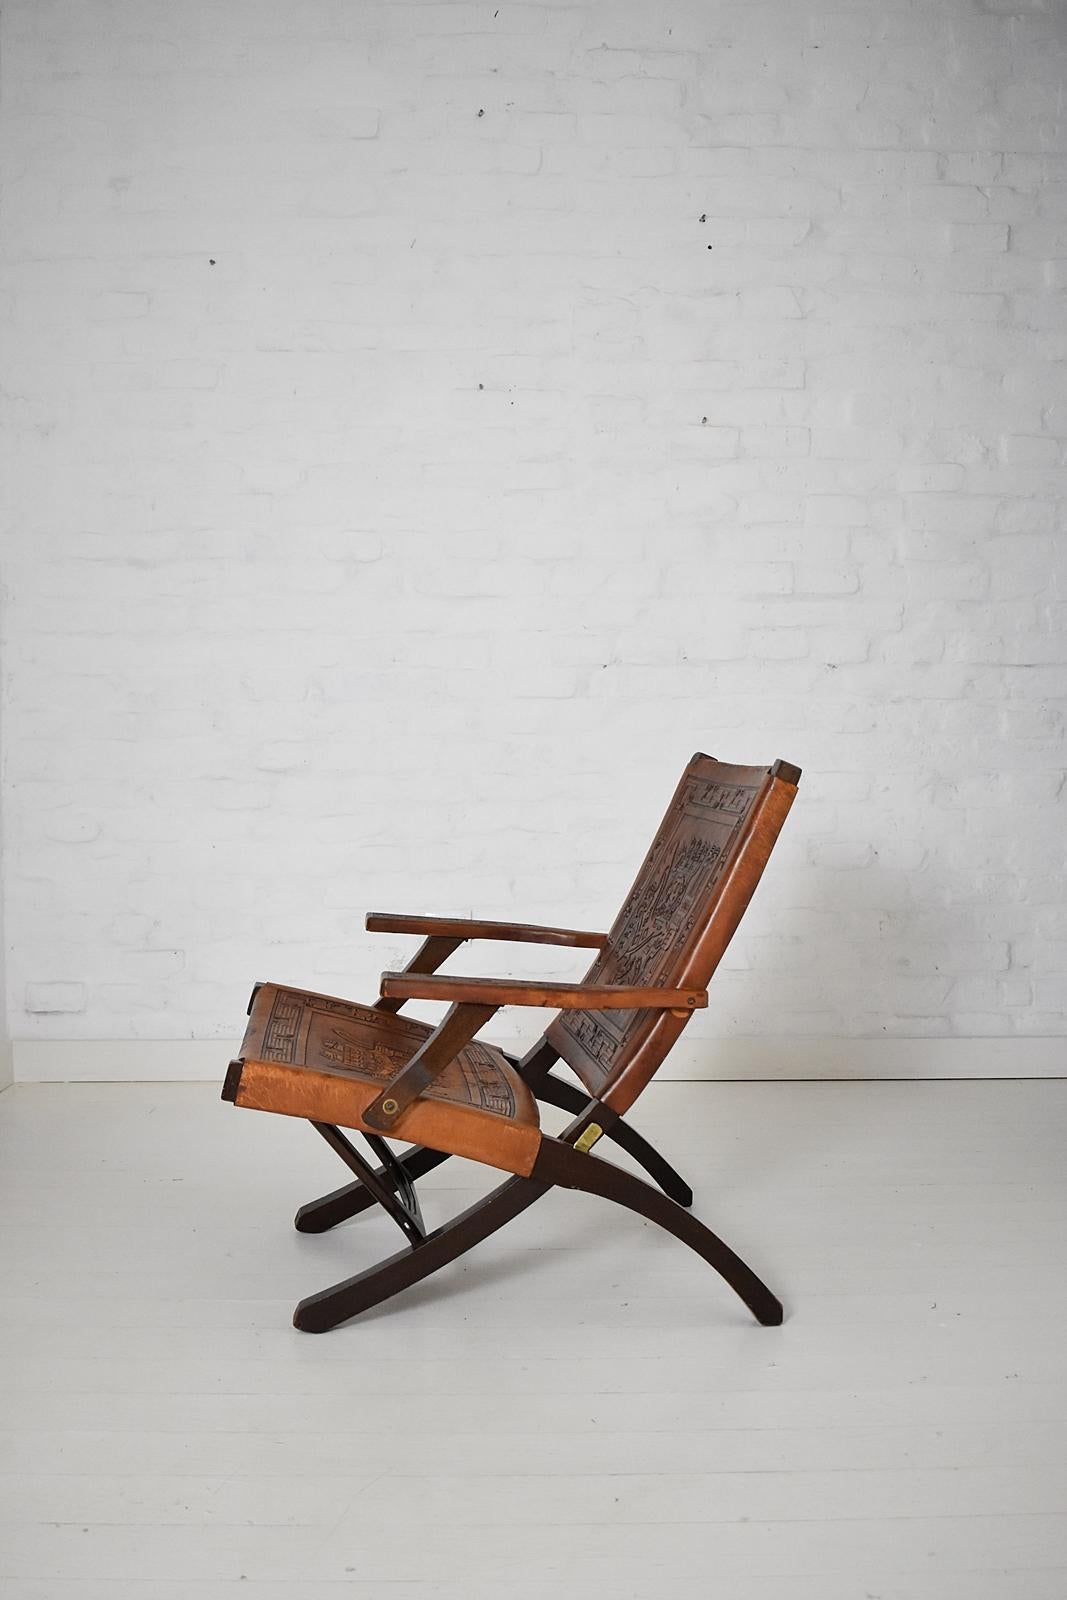 20th Century Mid-Century Modern Ecuadorian Wood and Leather Folding Chair by Angel Pazmino